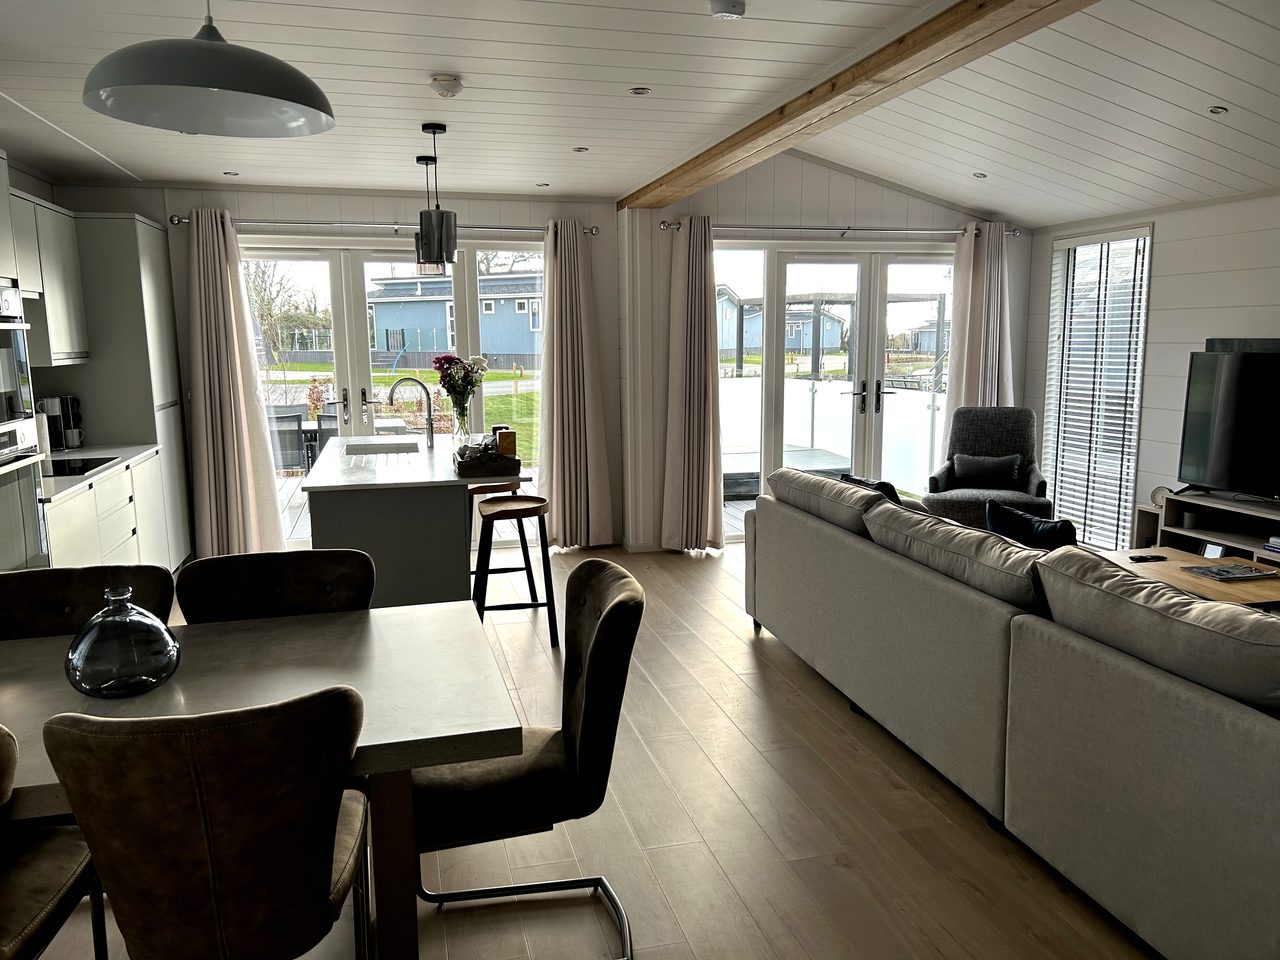 Accommodation Review: Bude Coastal Resort, Cornwall